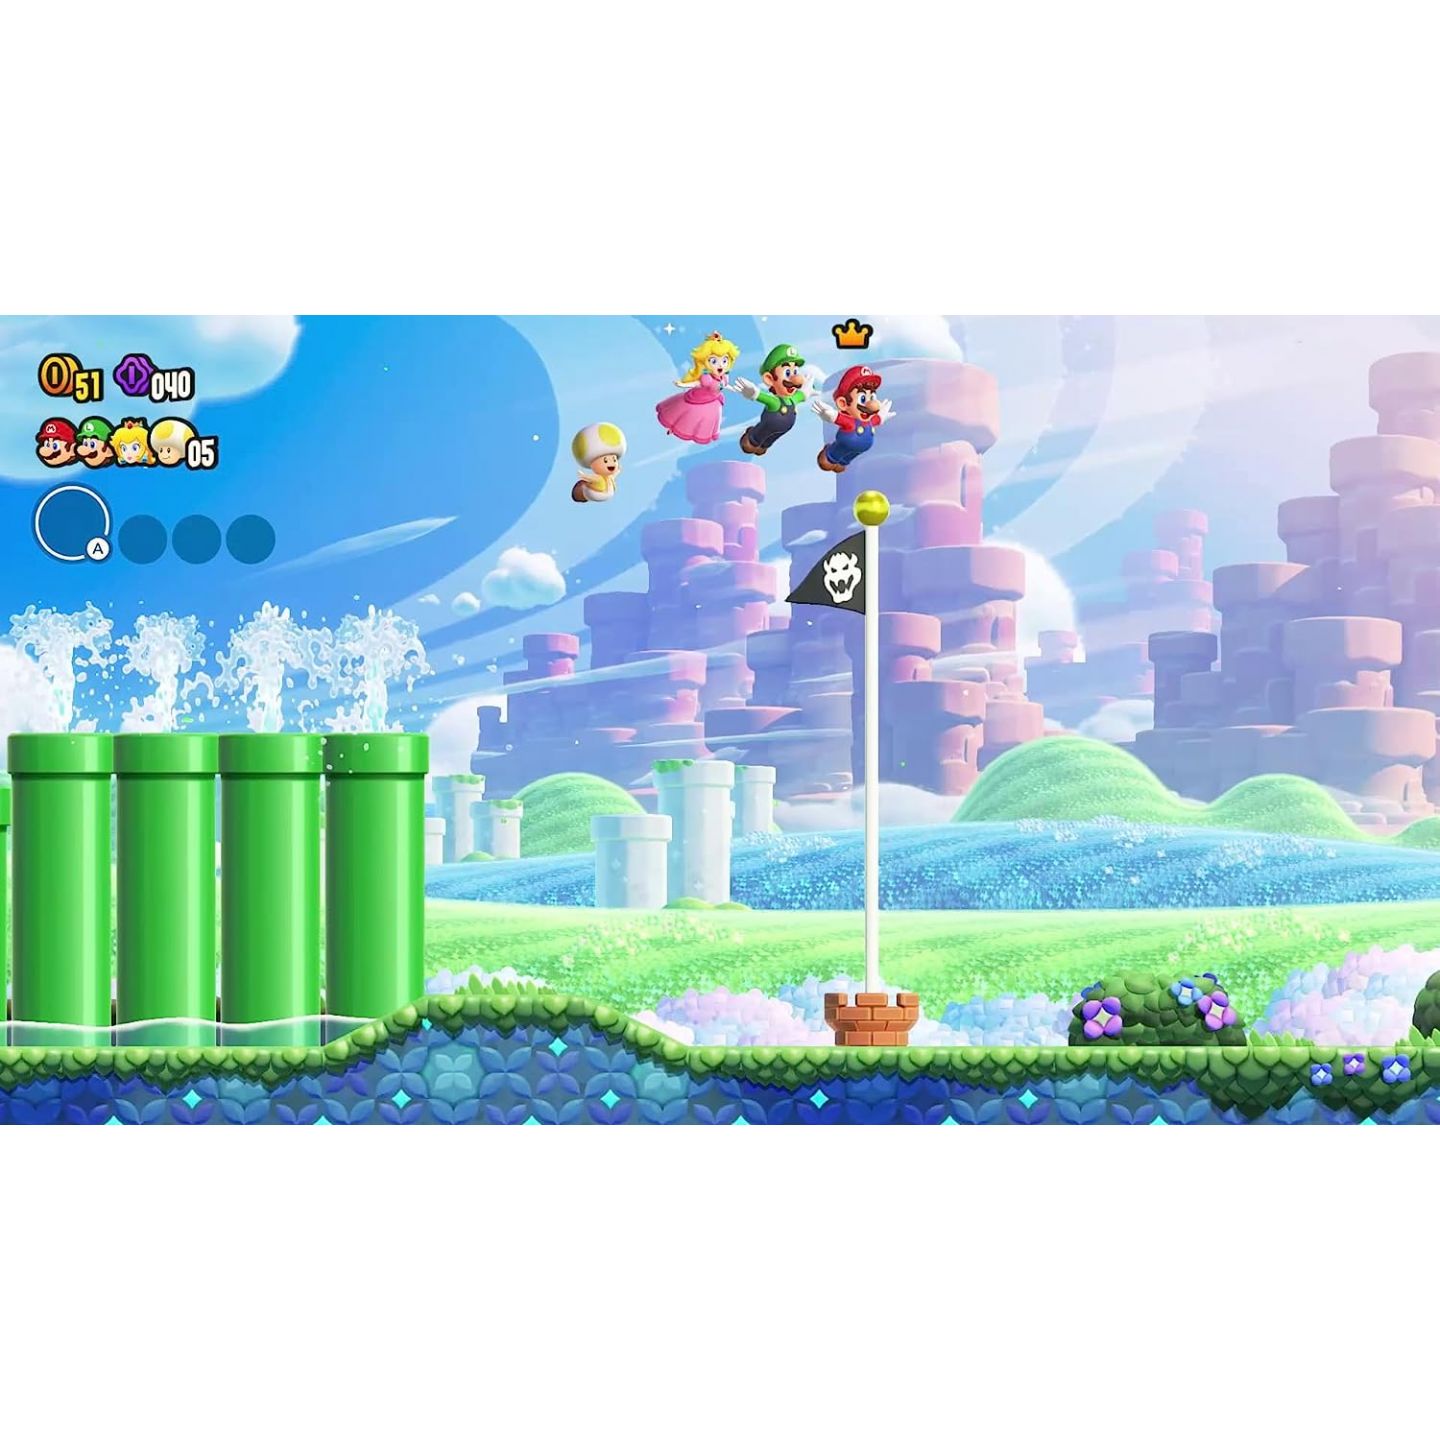 Super Mario Bros. Wonder - Nintendo Switch - TRYAKSH STORE